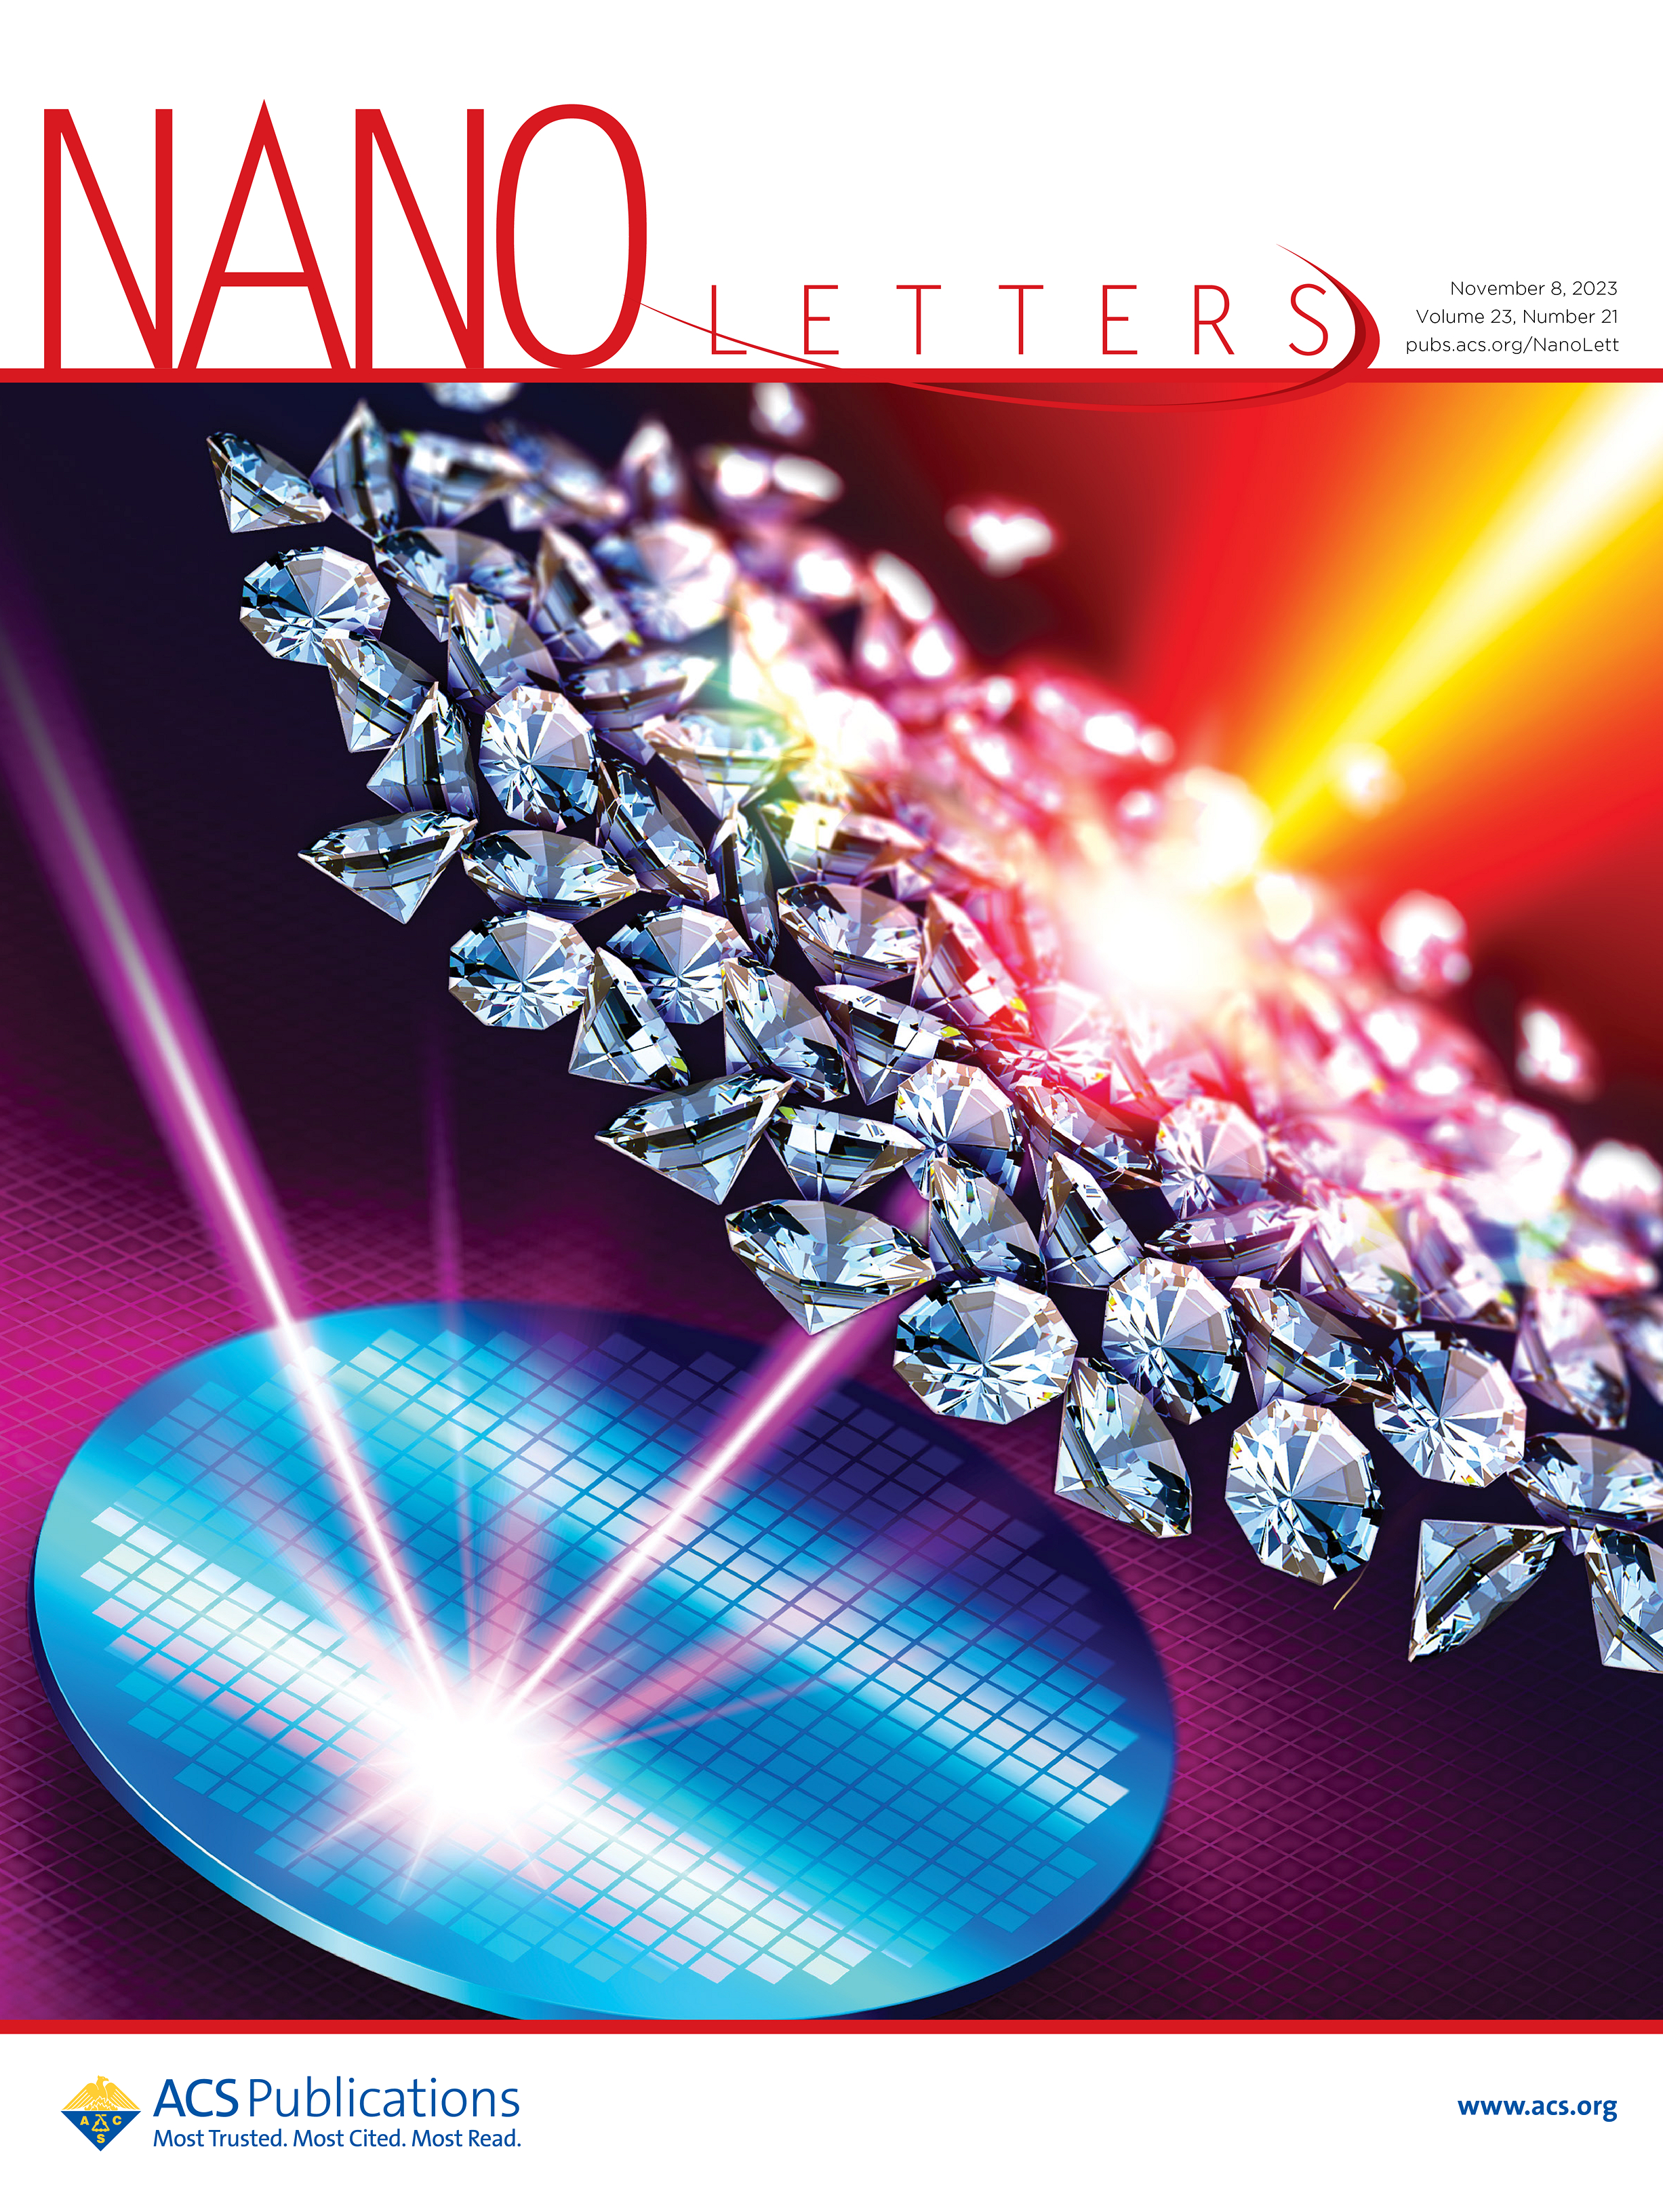 Imaging Extreme Ultraviolet Radiation Using Nanodiamonds with Nitrogen-Vacancy Centers